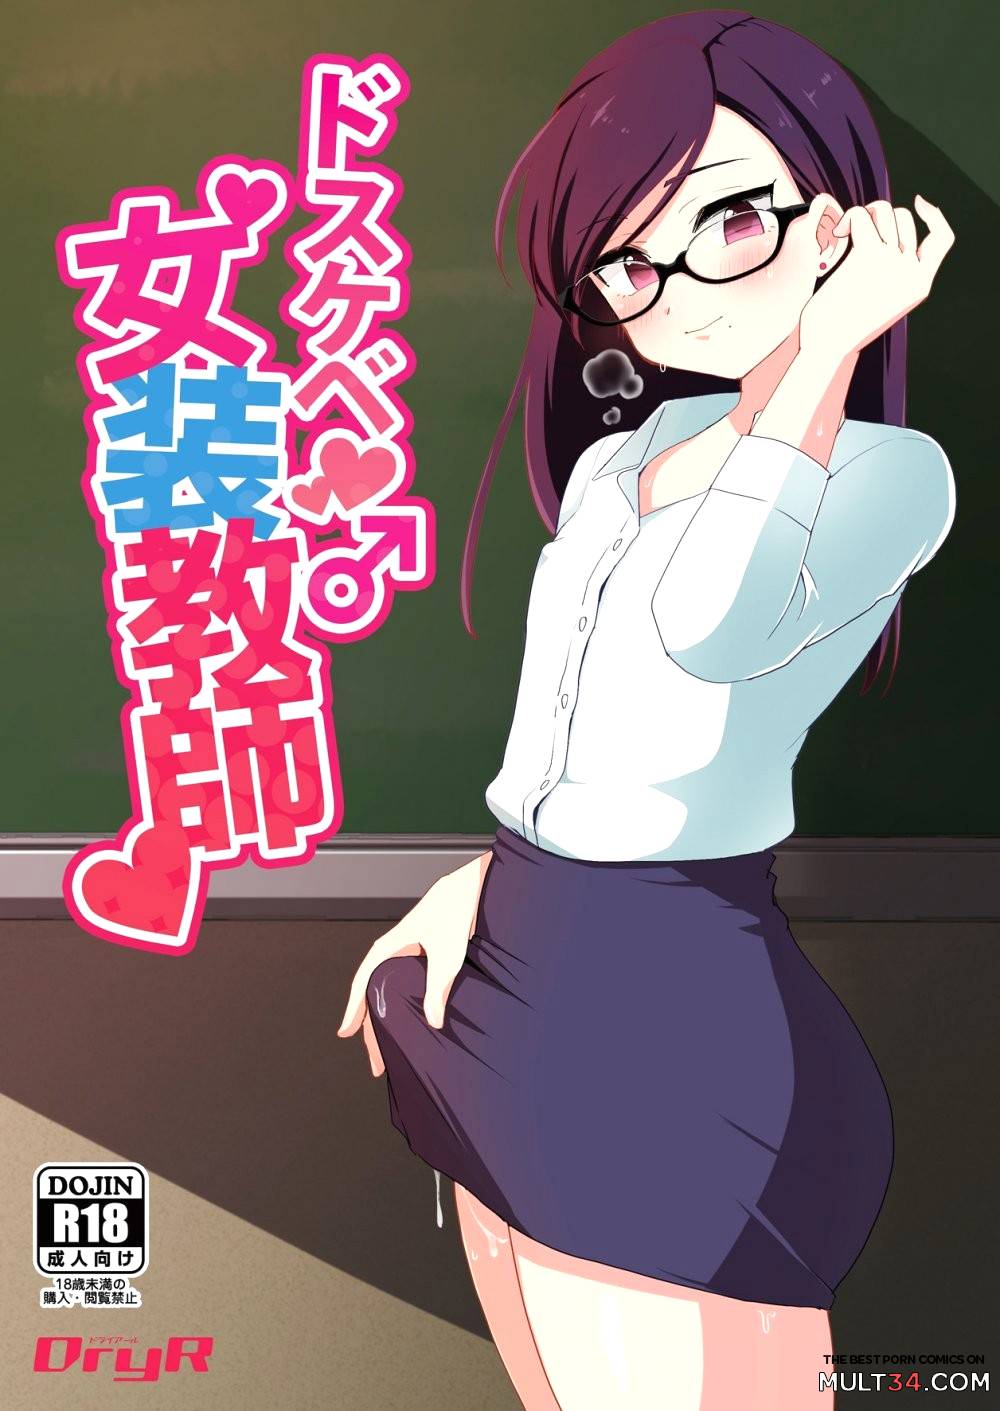 Manga porn comics crossdressing